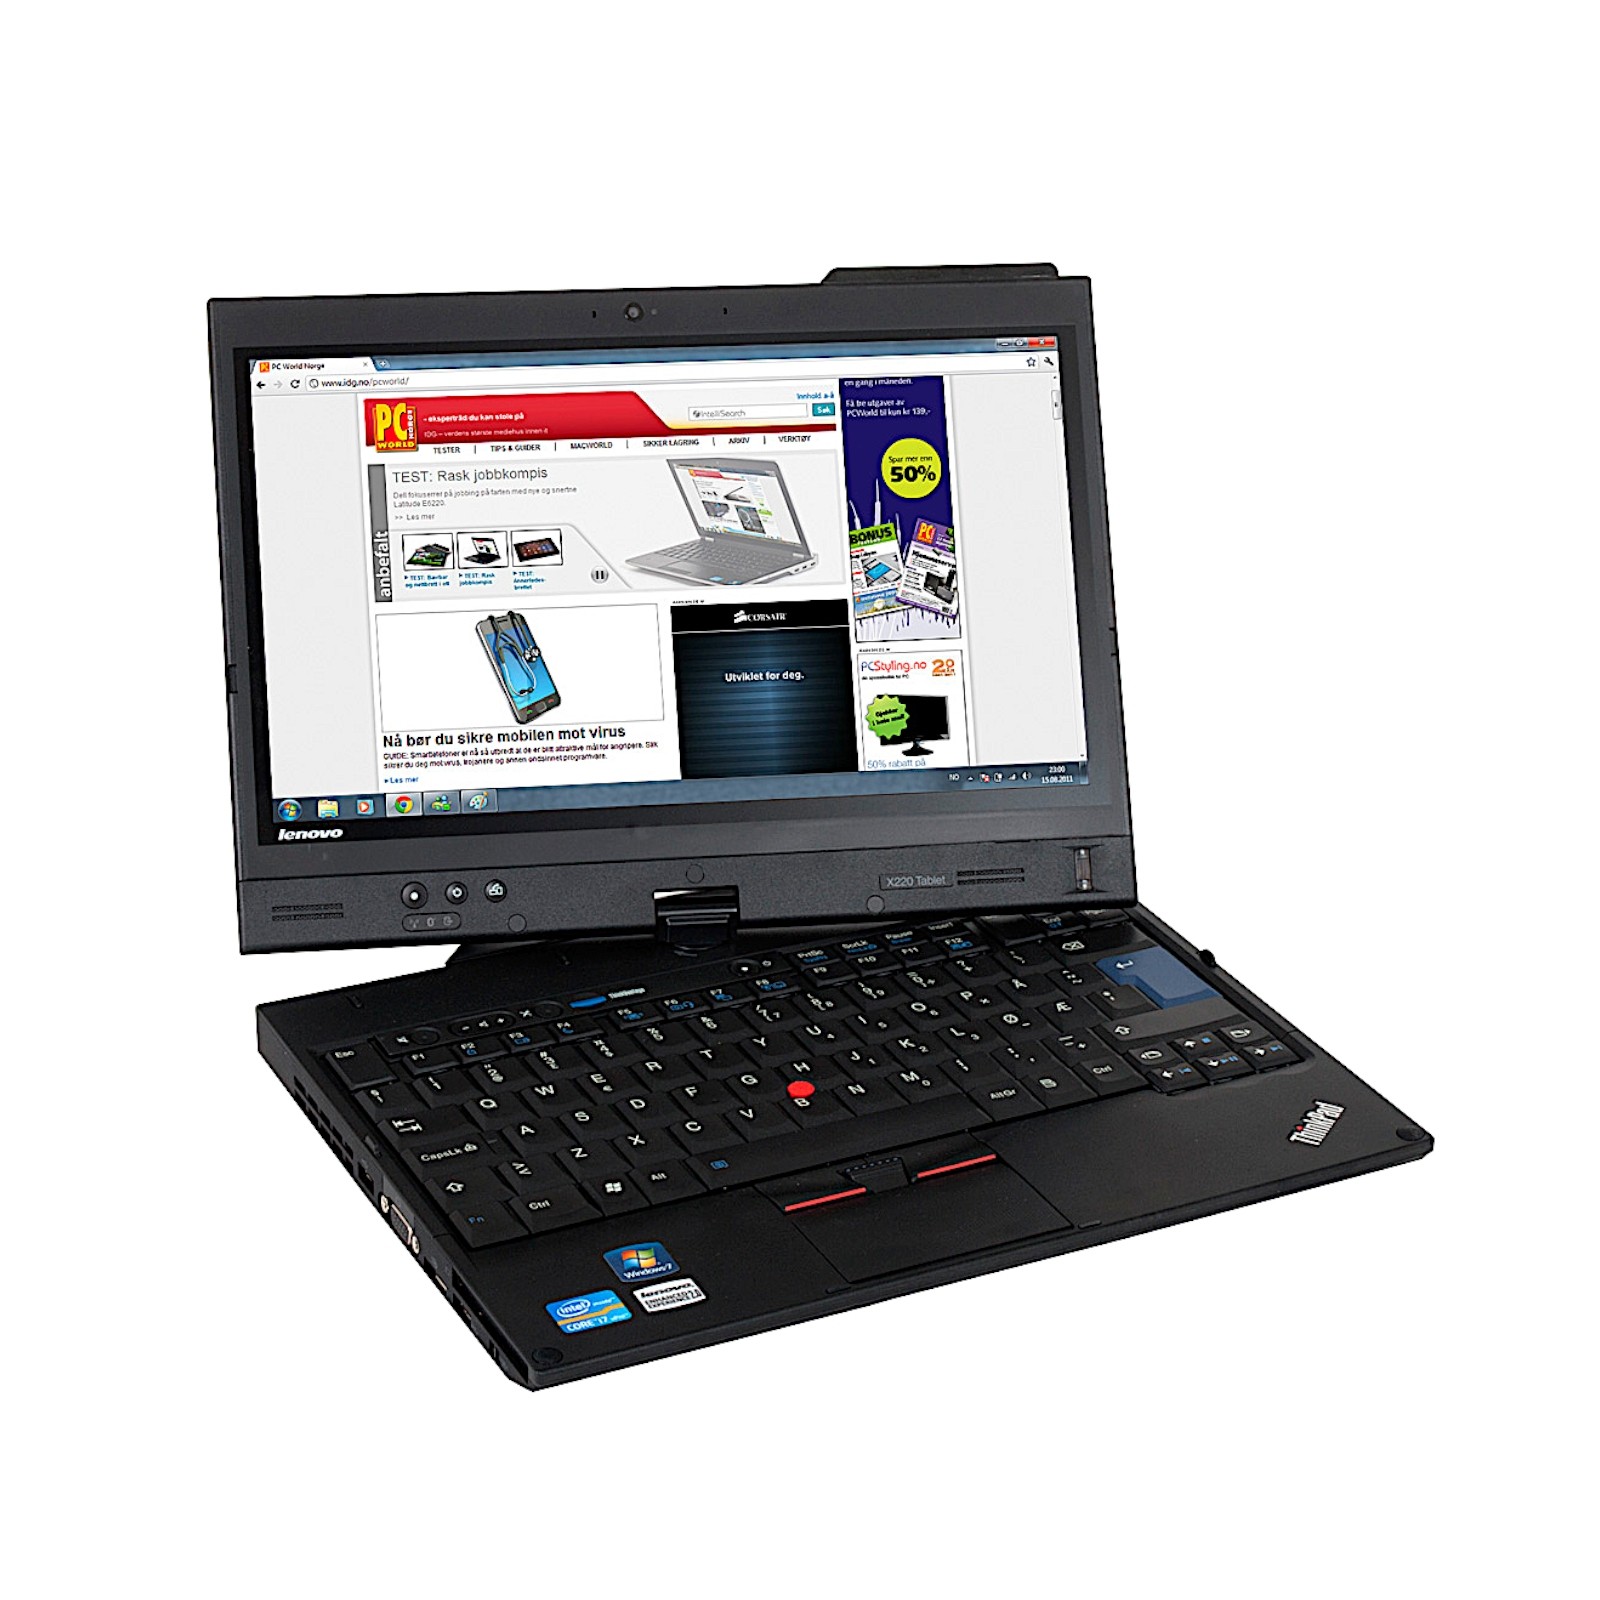 Lenovo ThinkPad X220 12.5" Tablet Laptop